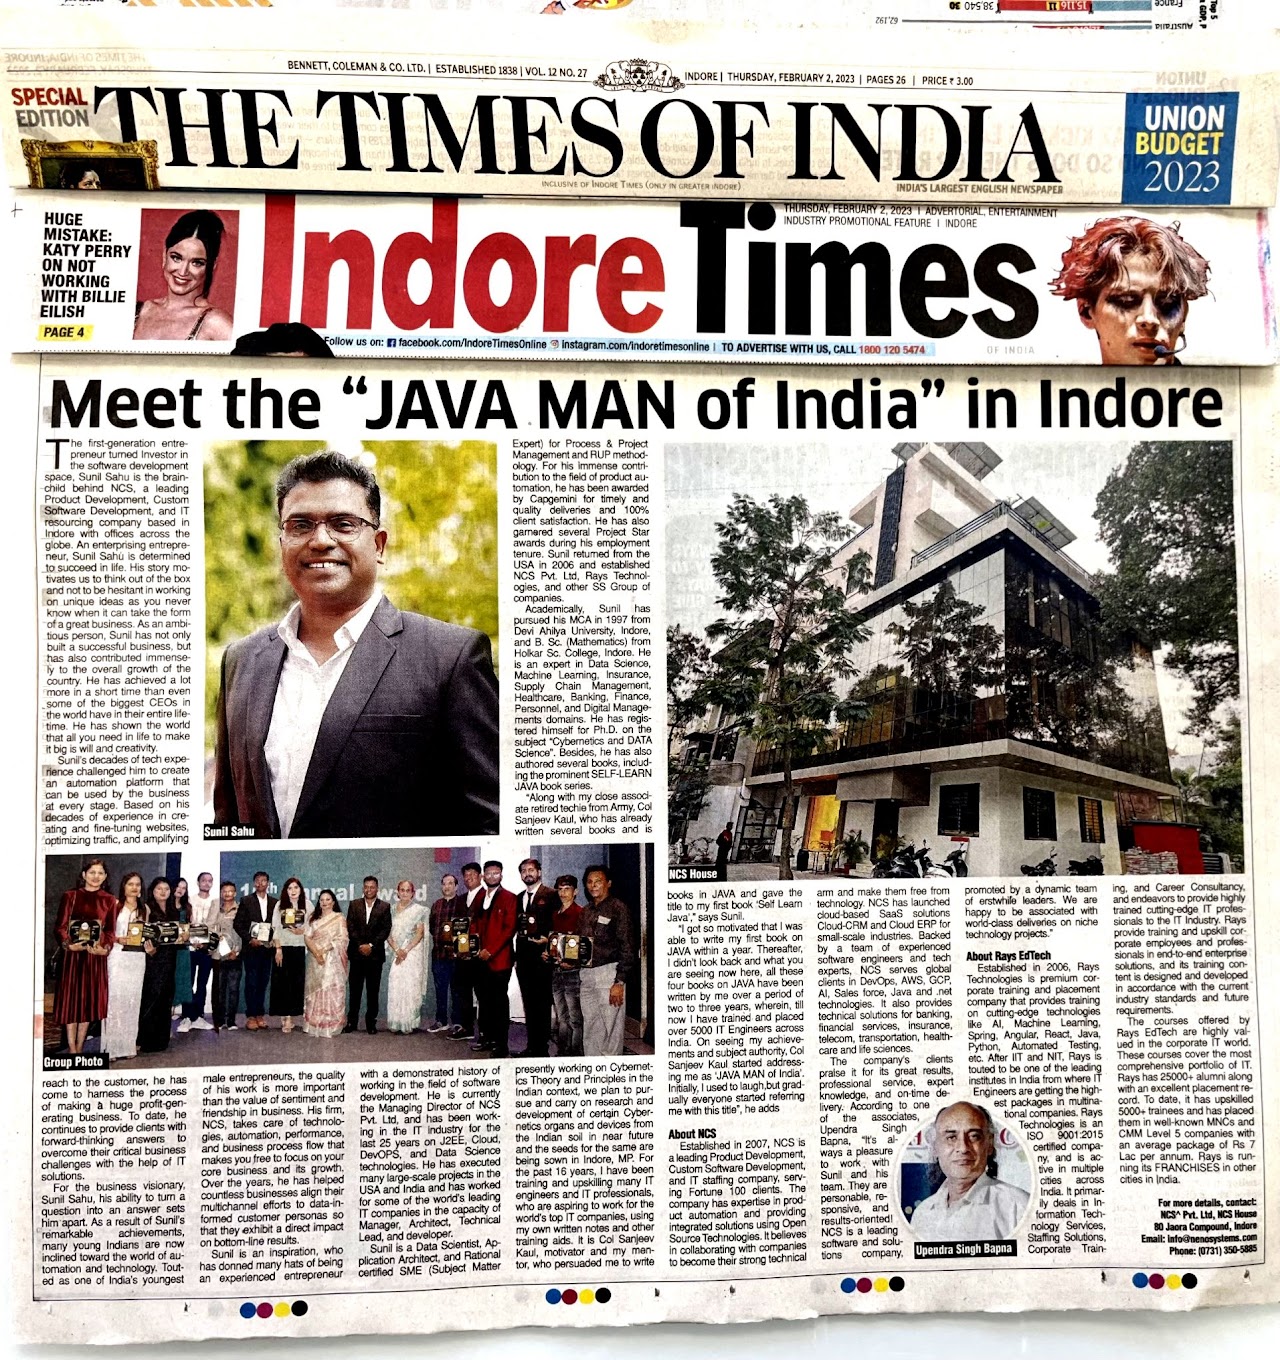 Meet Javaman of India